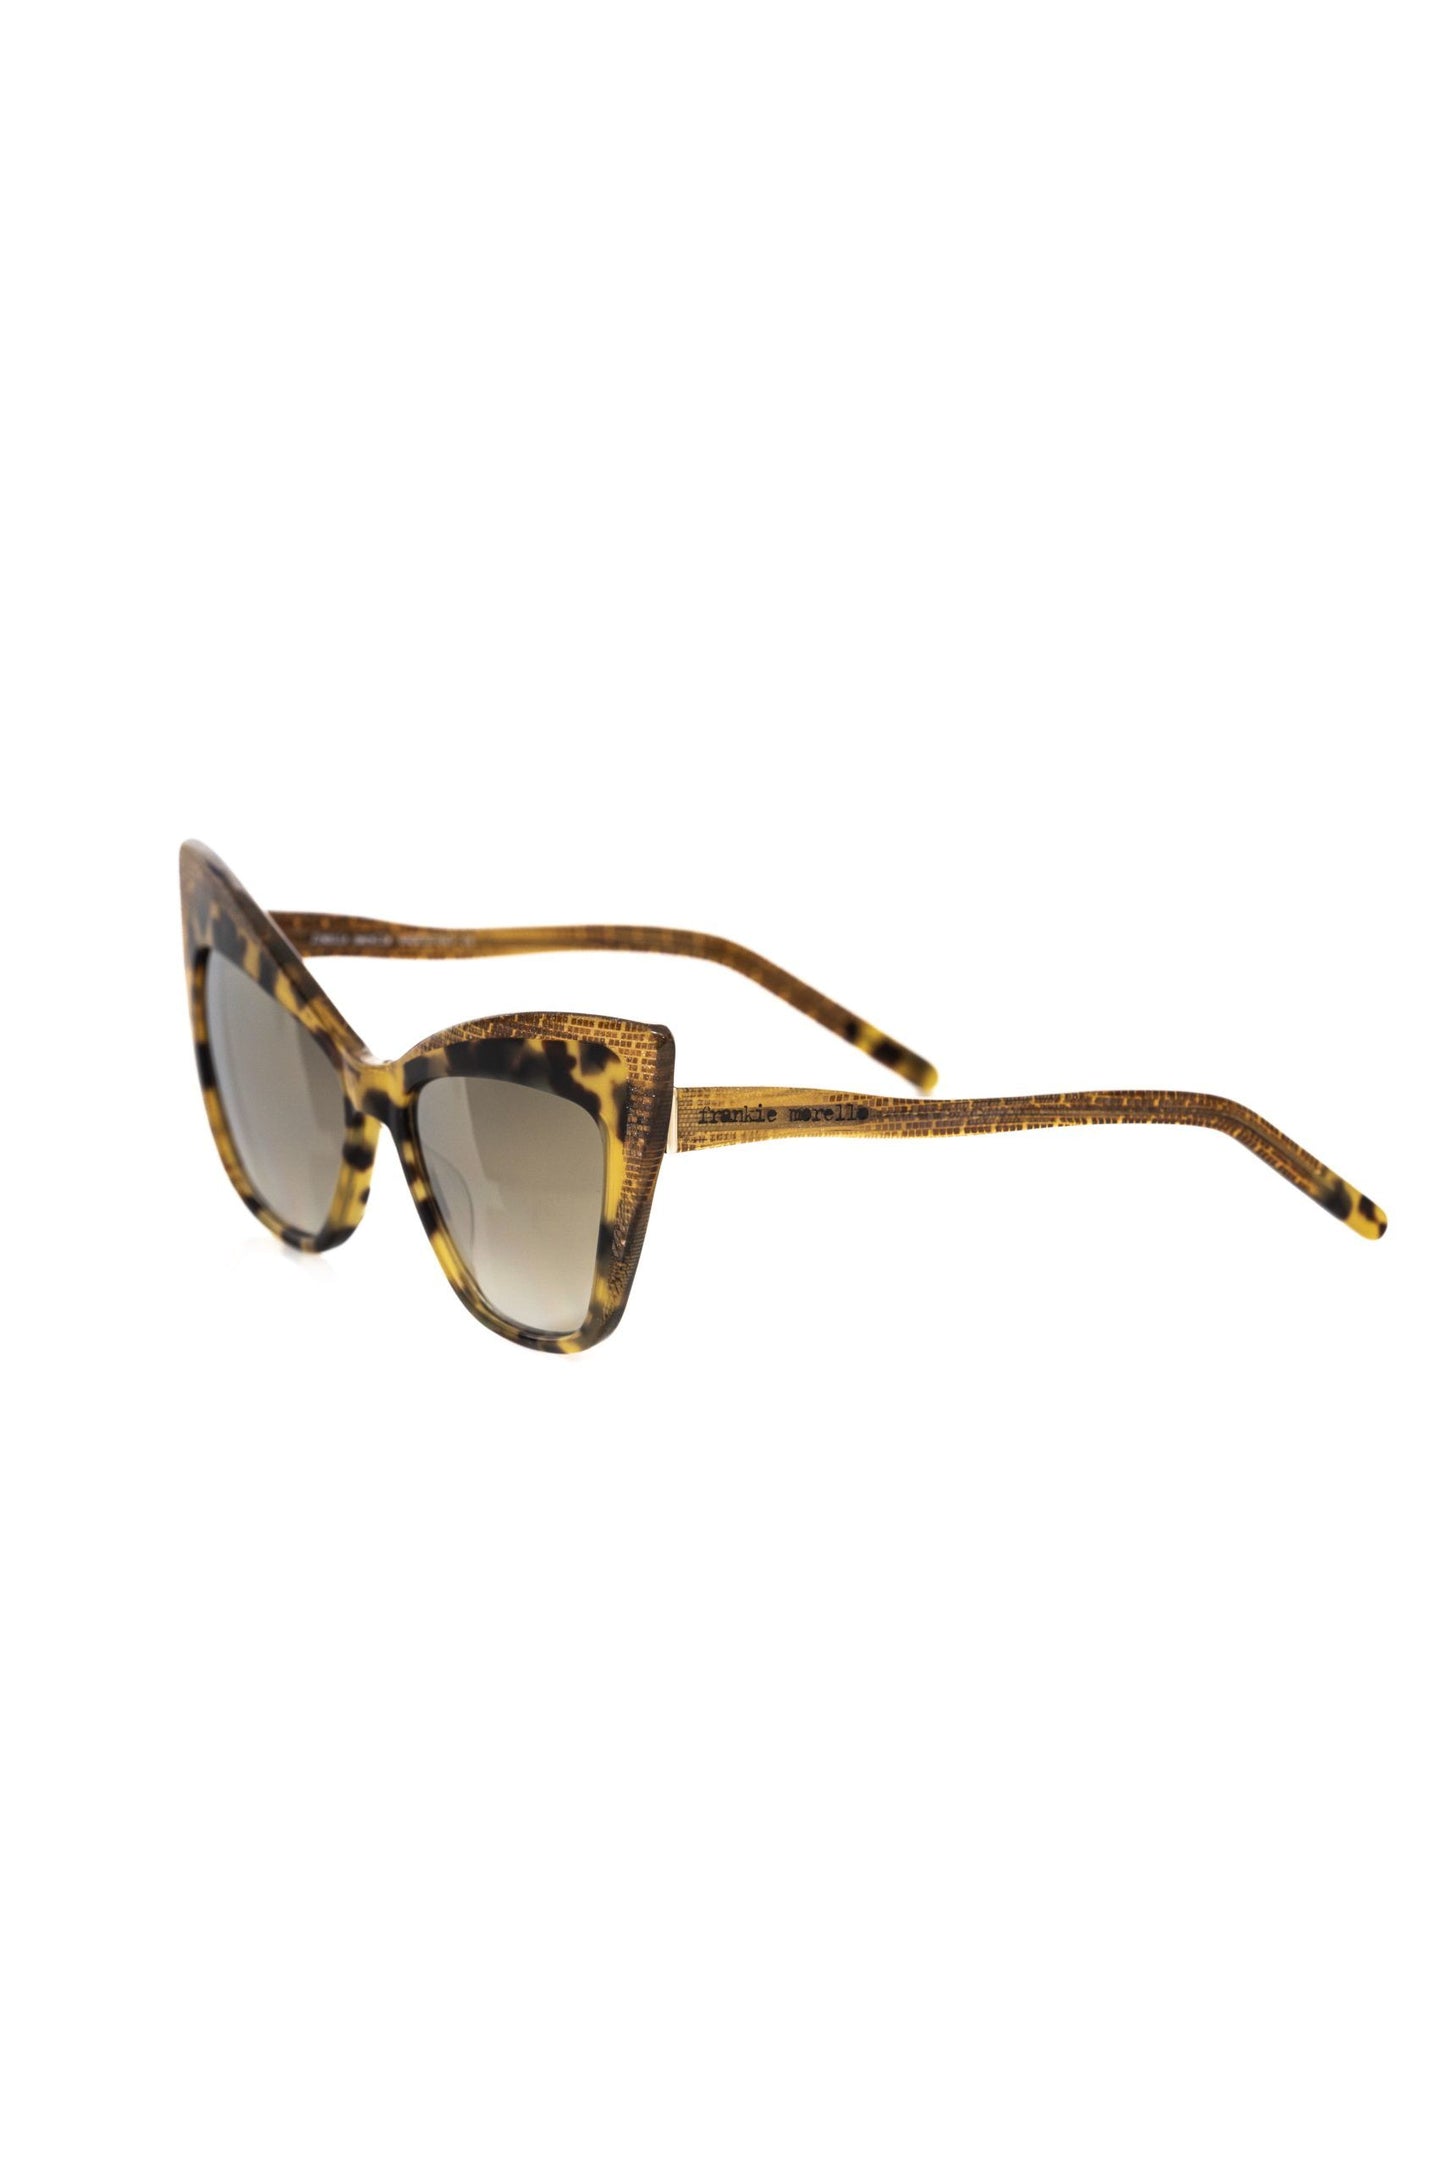 Frankie Morello FRMO-22078 Brown Acetate Sunglasses